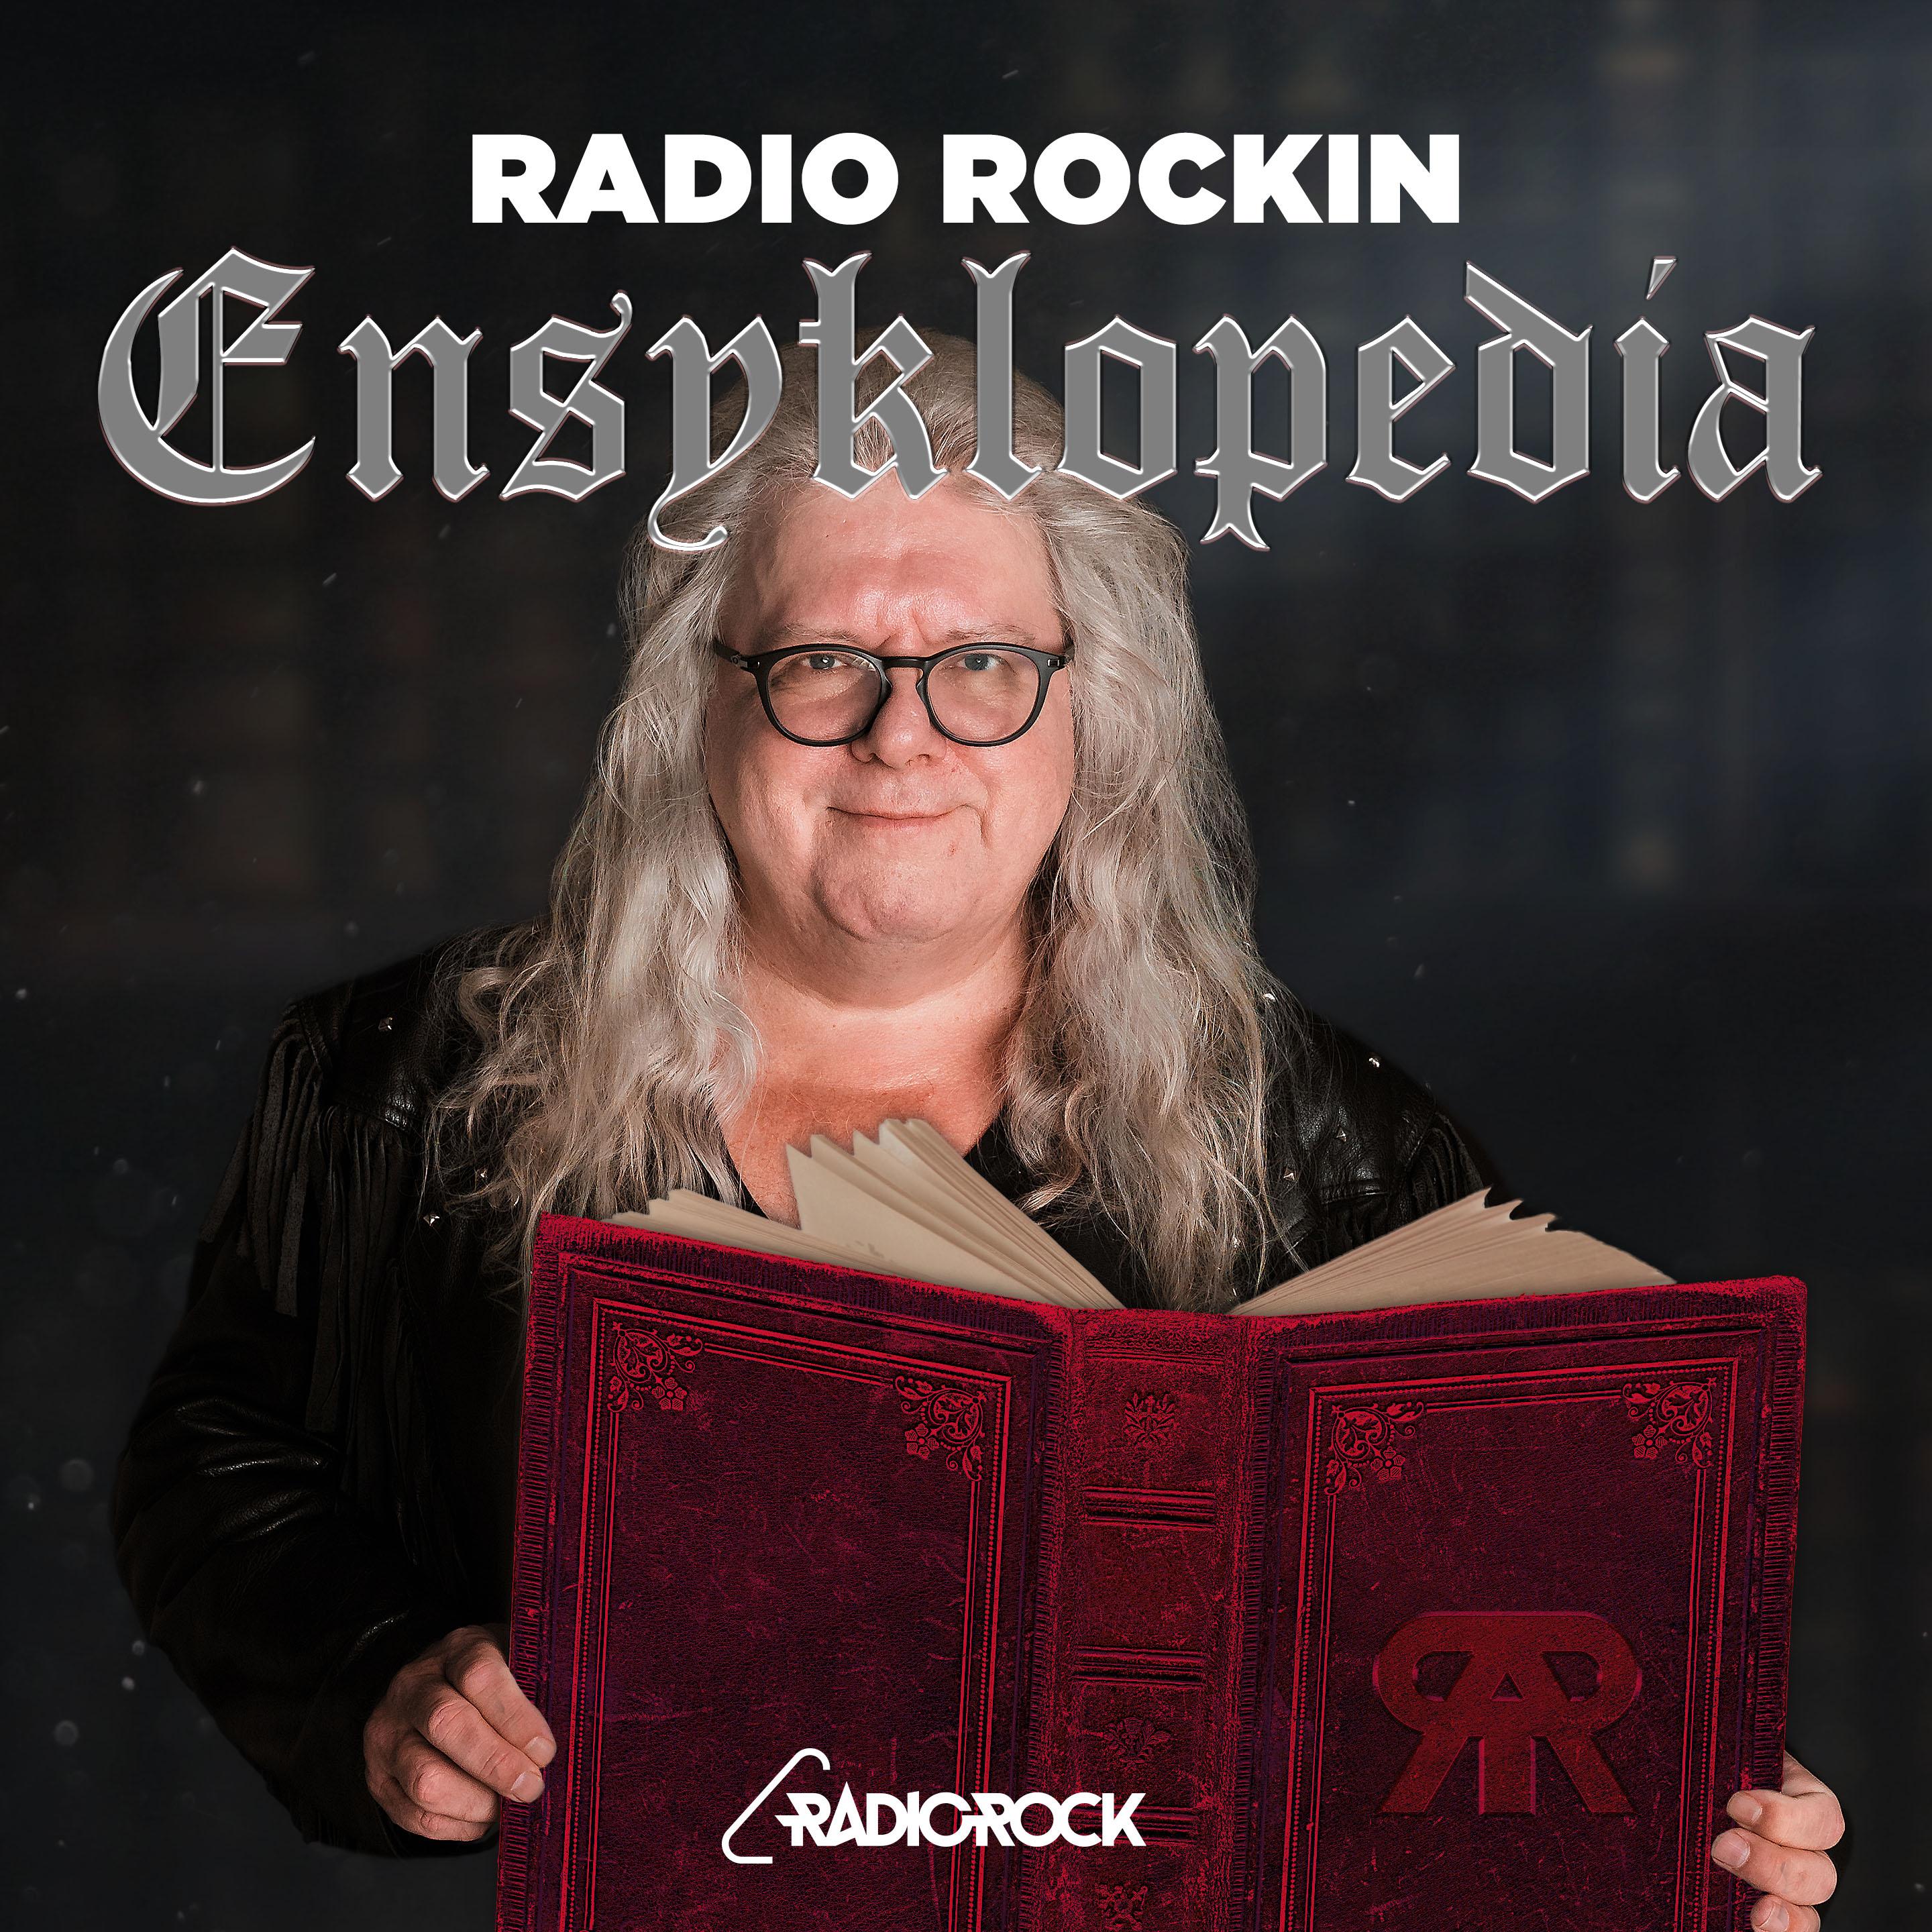 Rockin ensyklopedia - podcast | Supla